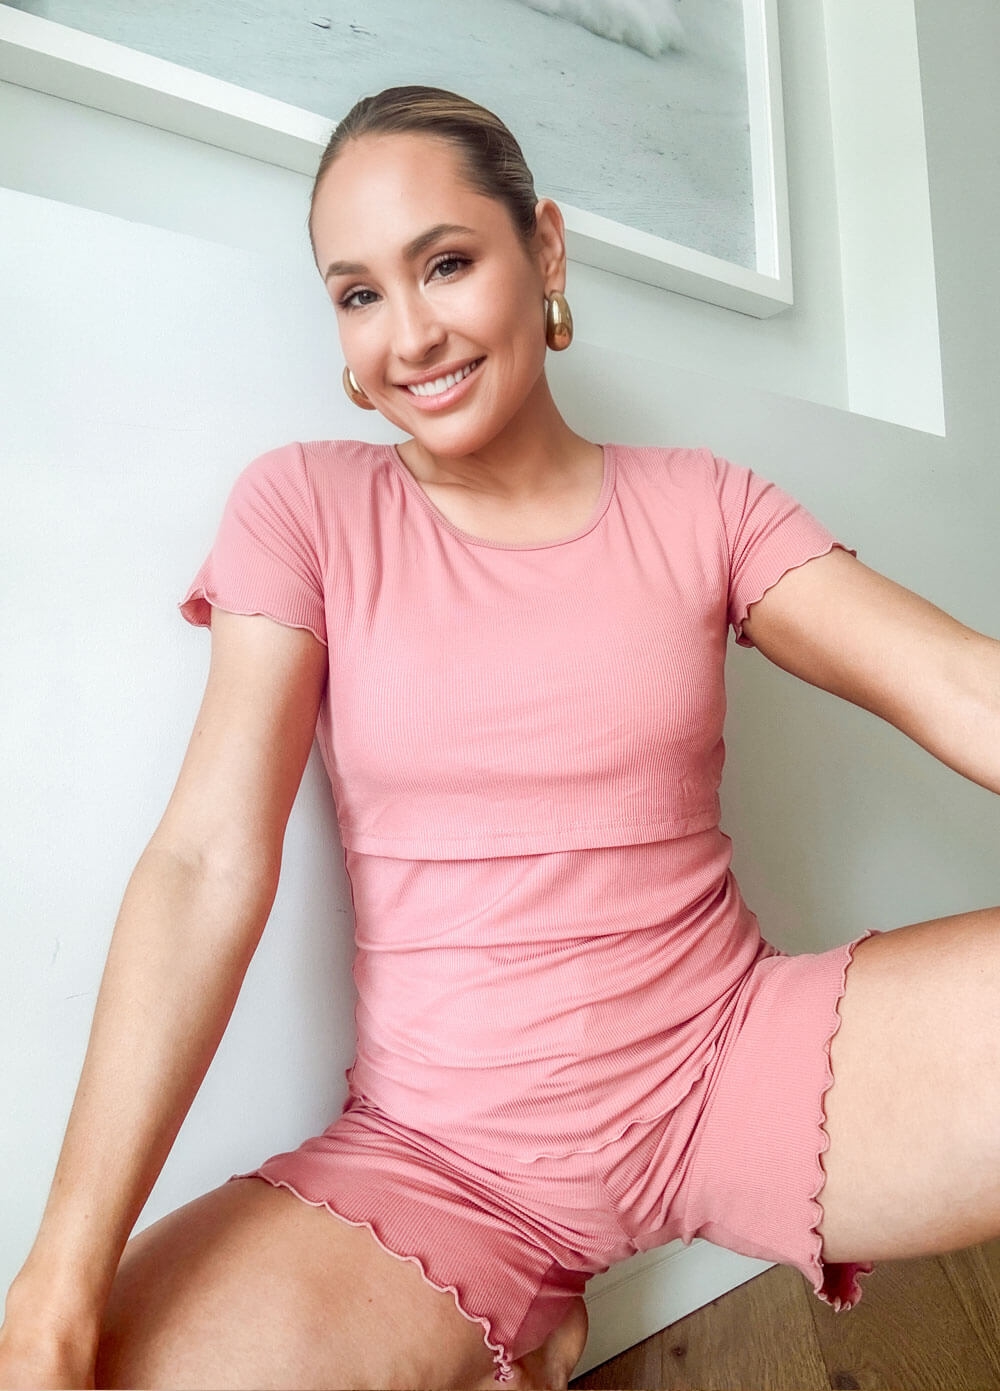 Lait & Co - Diore Mama Made Nursing Short Set in Rose Pink